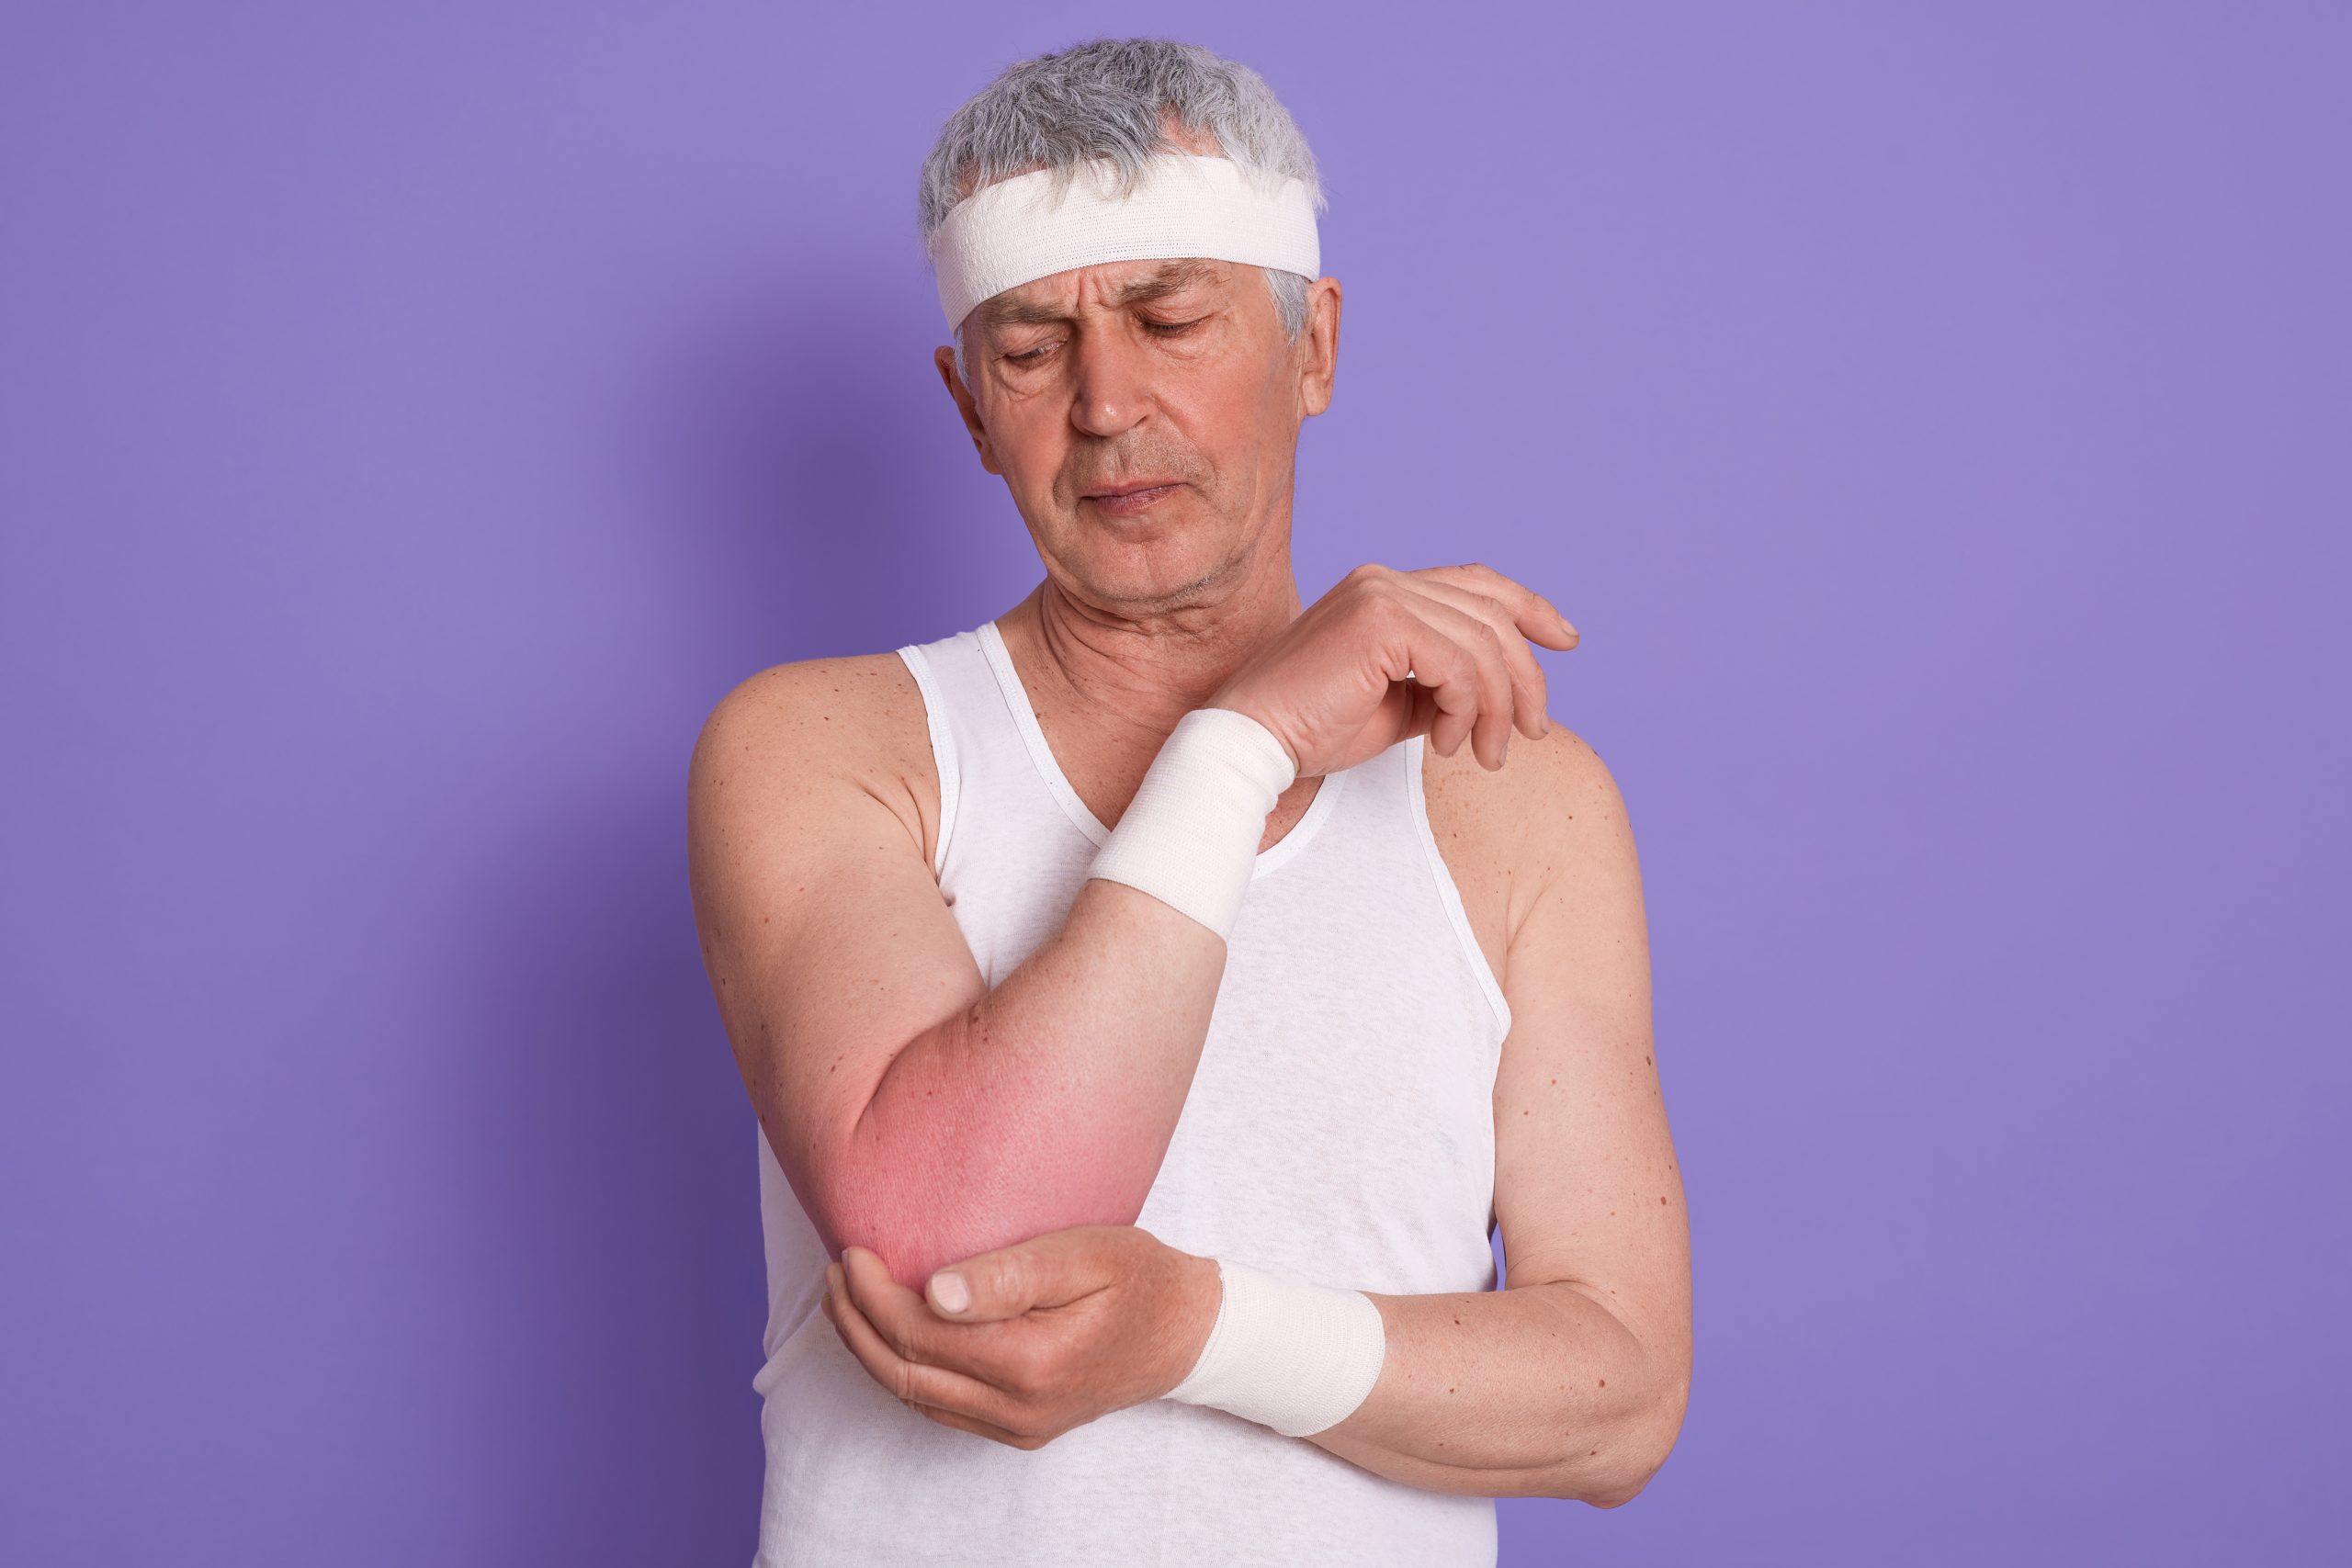 Studio shot of elderly man wearing white sleeveless t shirt and showing elbow pain.